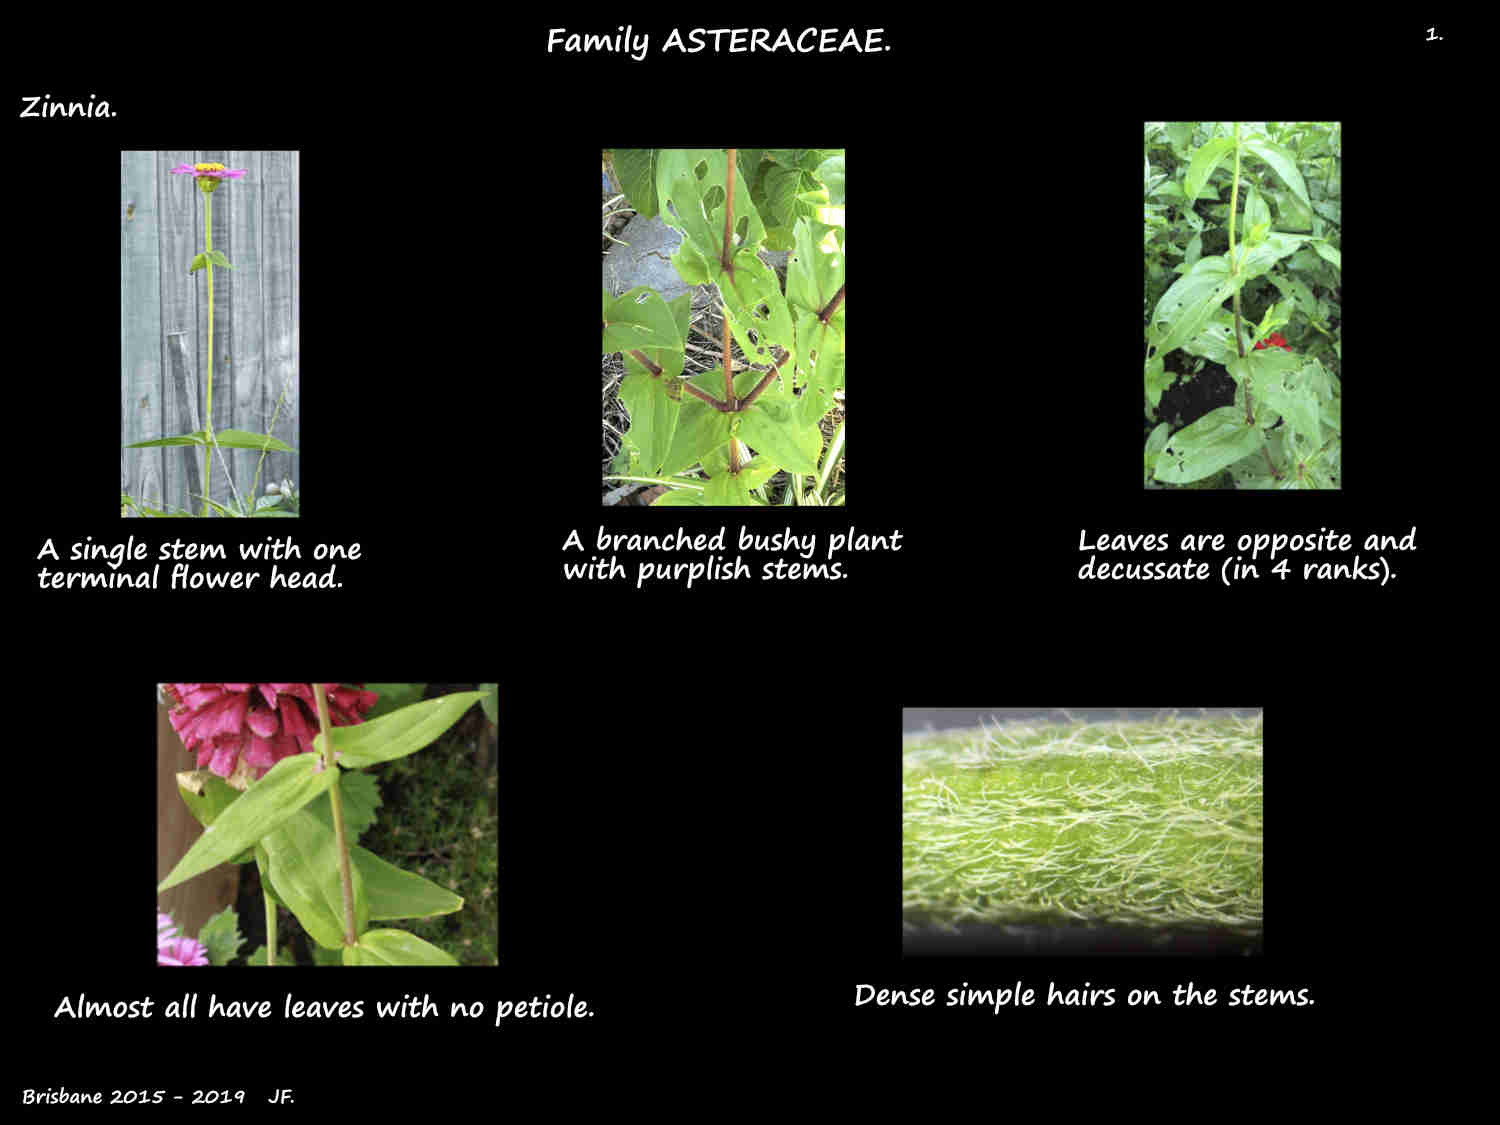 1 Zinnia plants & hairy stems